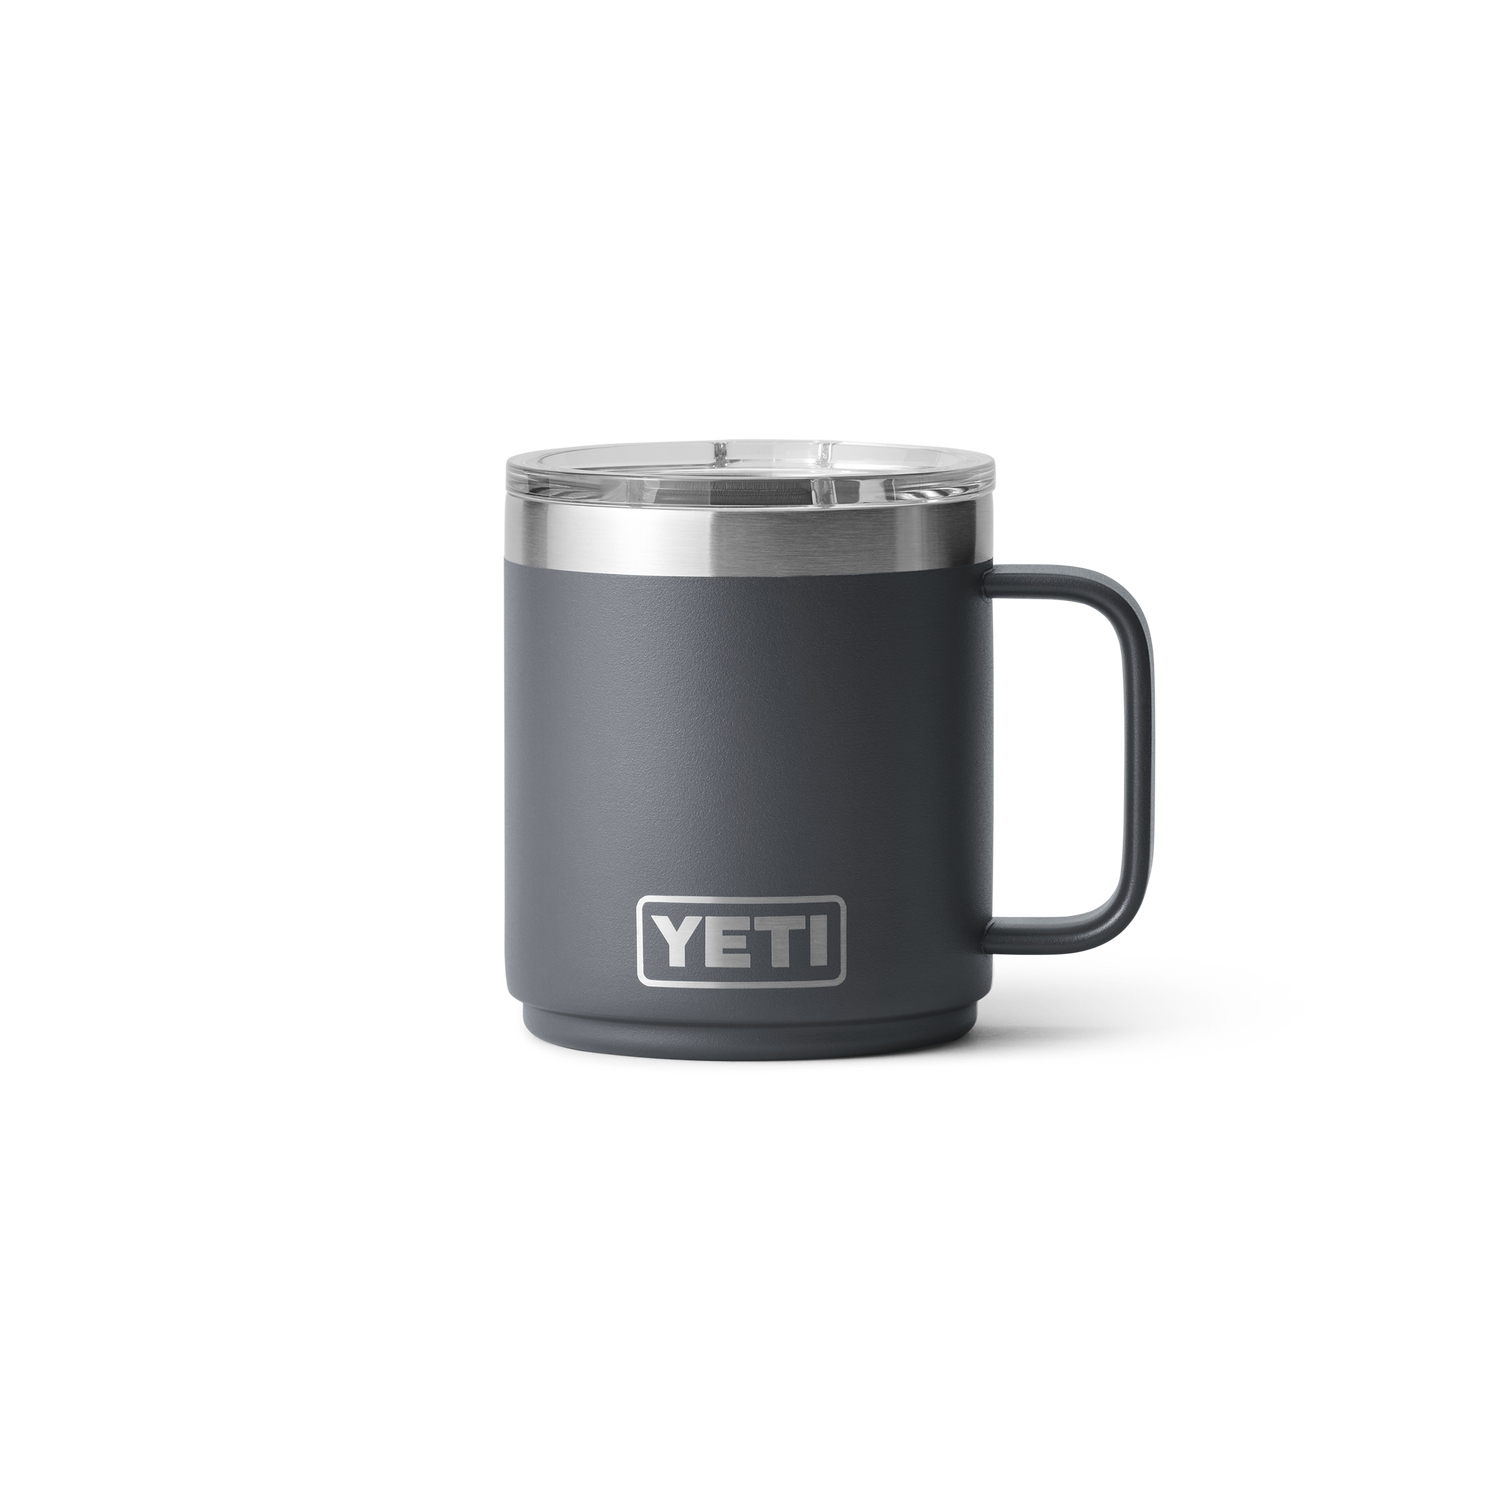  YETI Stainless Steel Rambler Travel Drinking_Cup